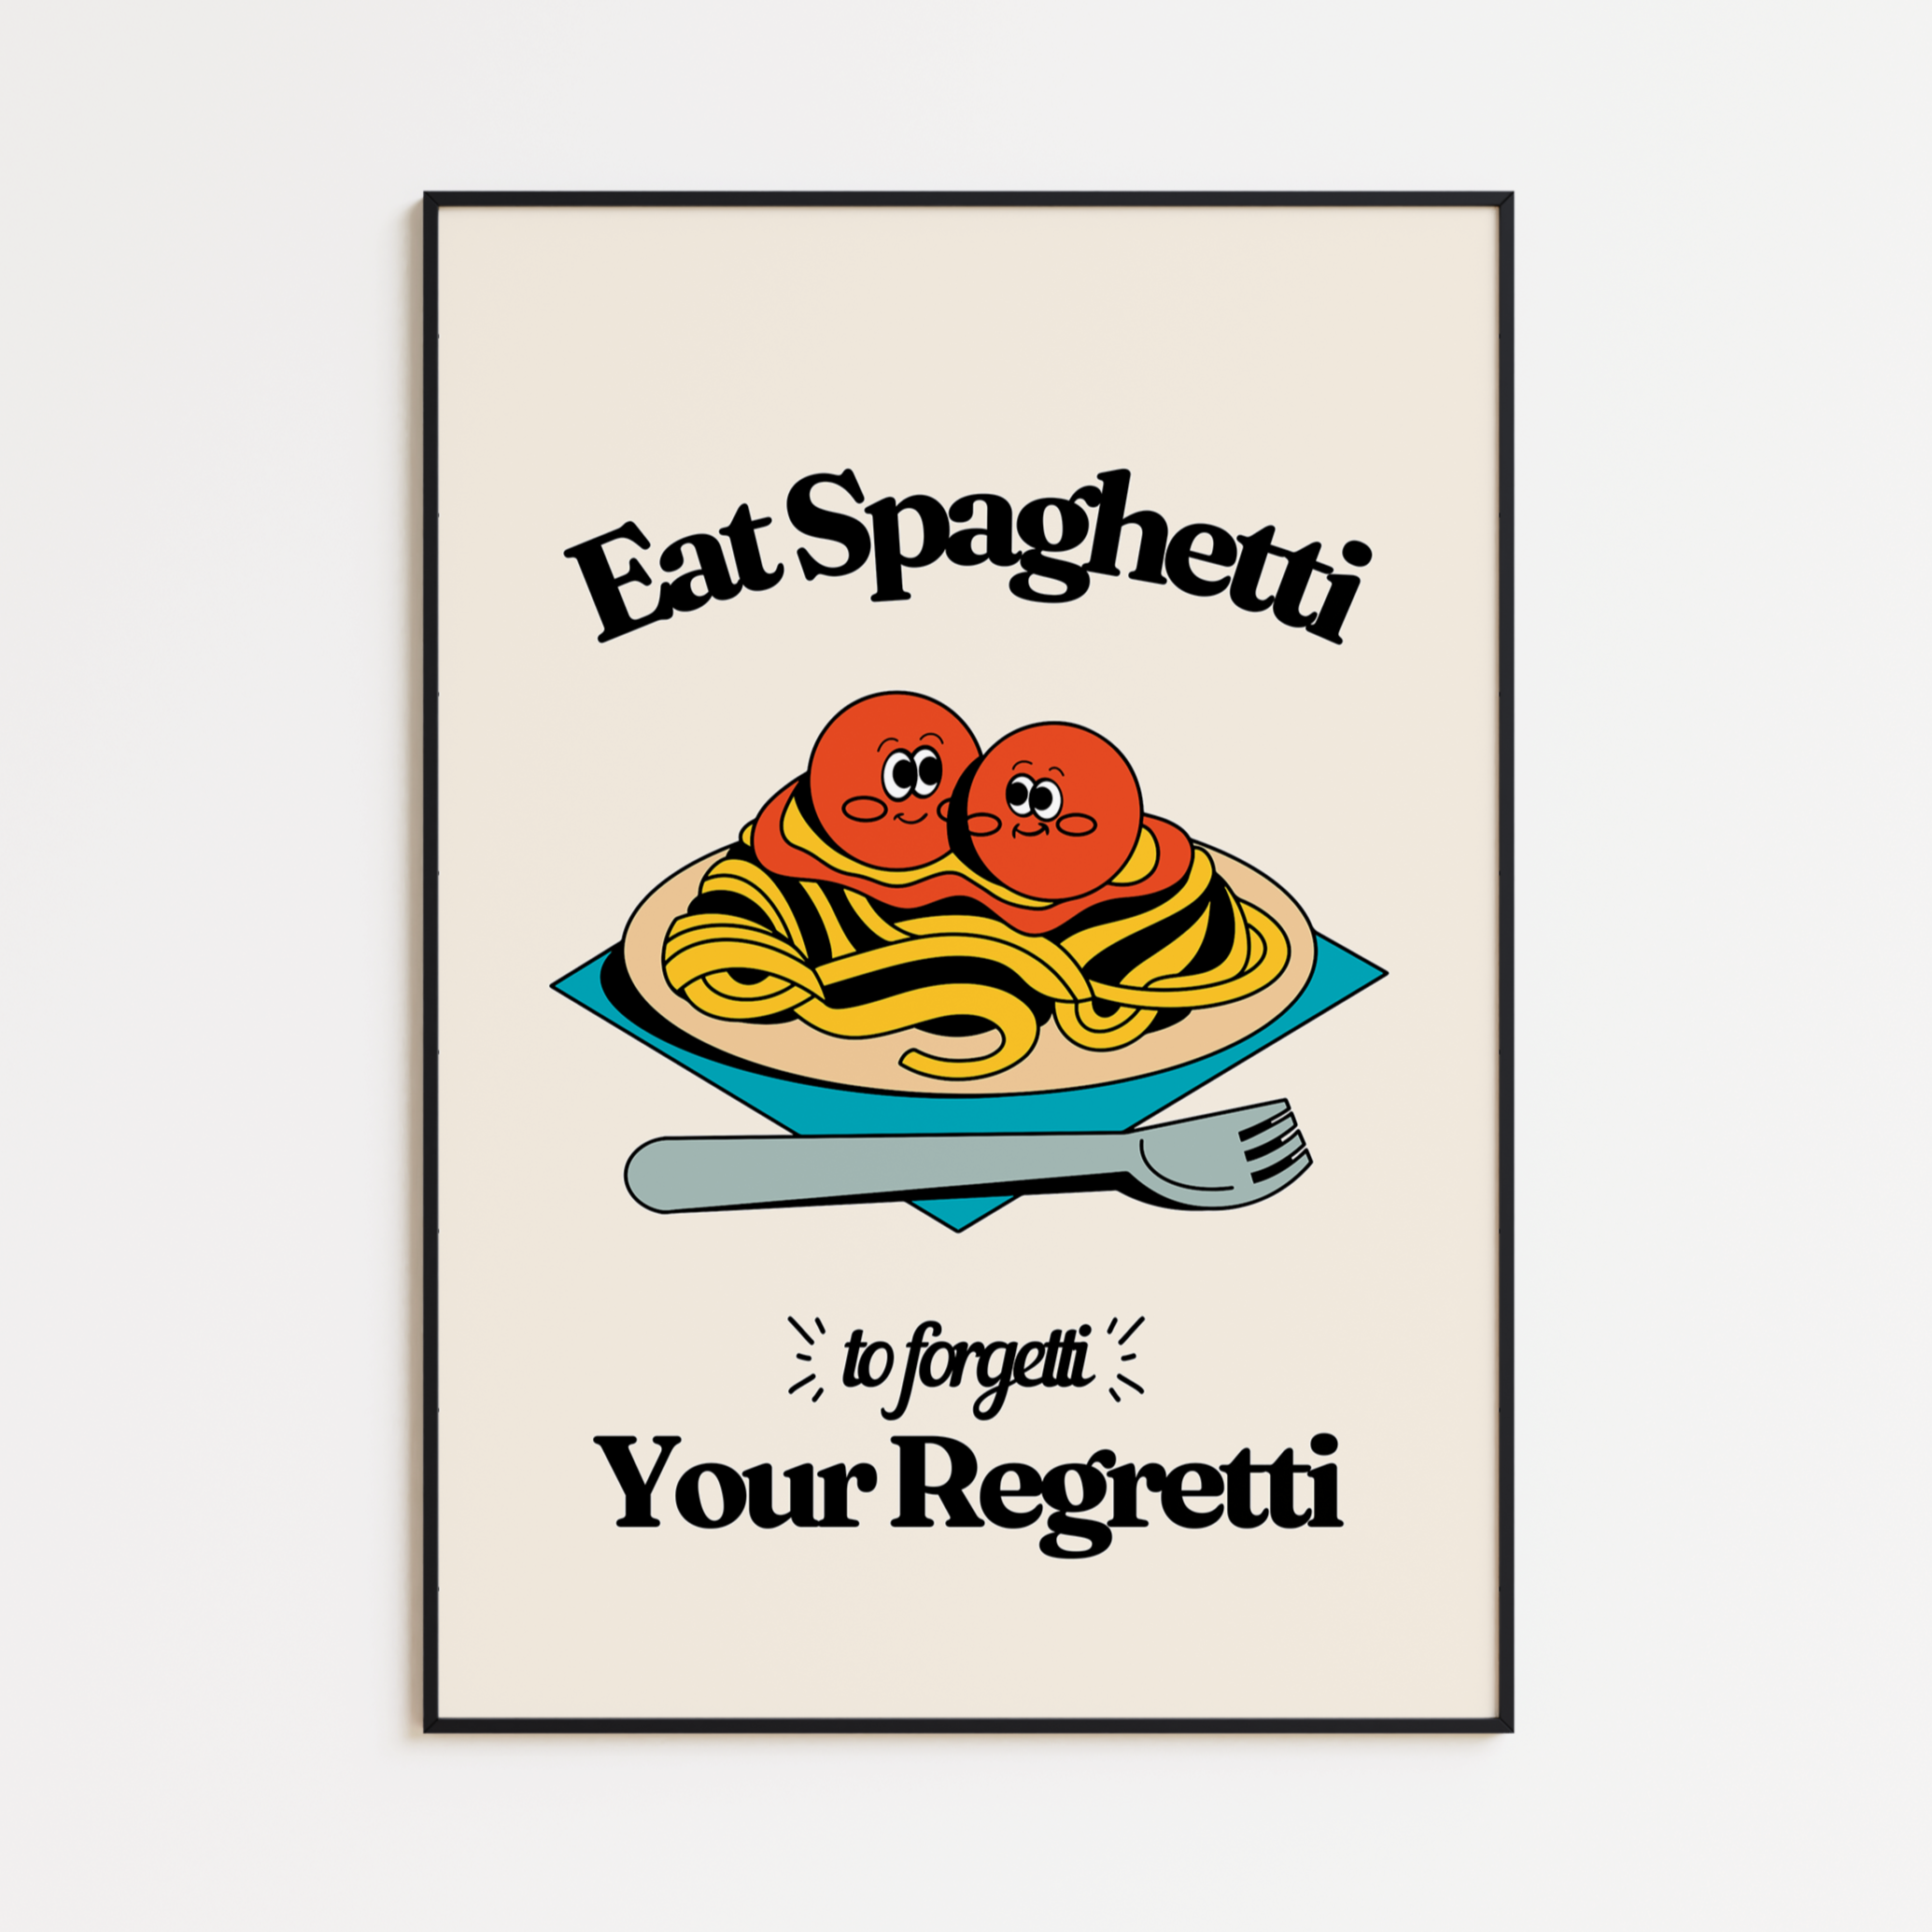 Spaghetti_blackframe.png